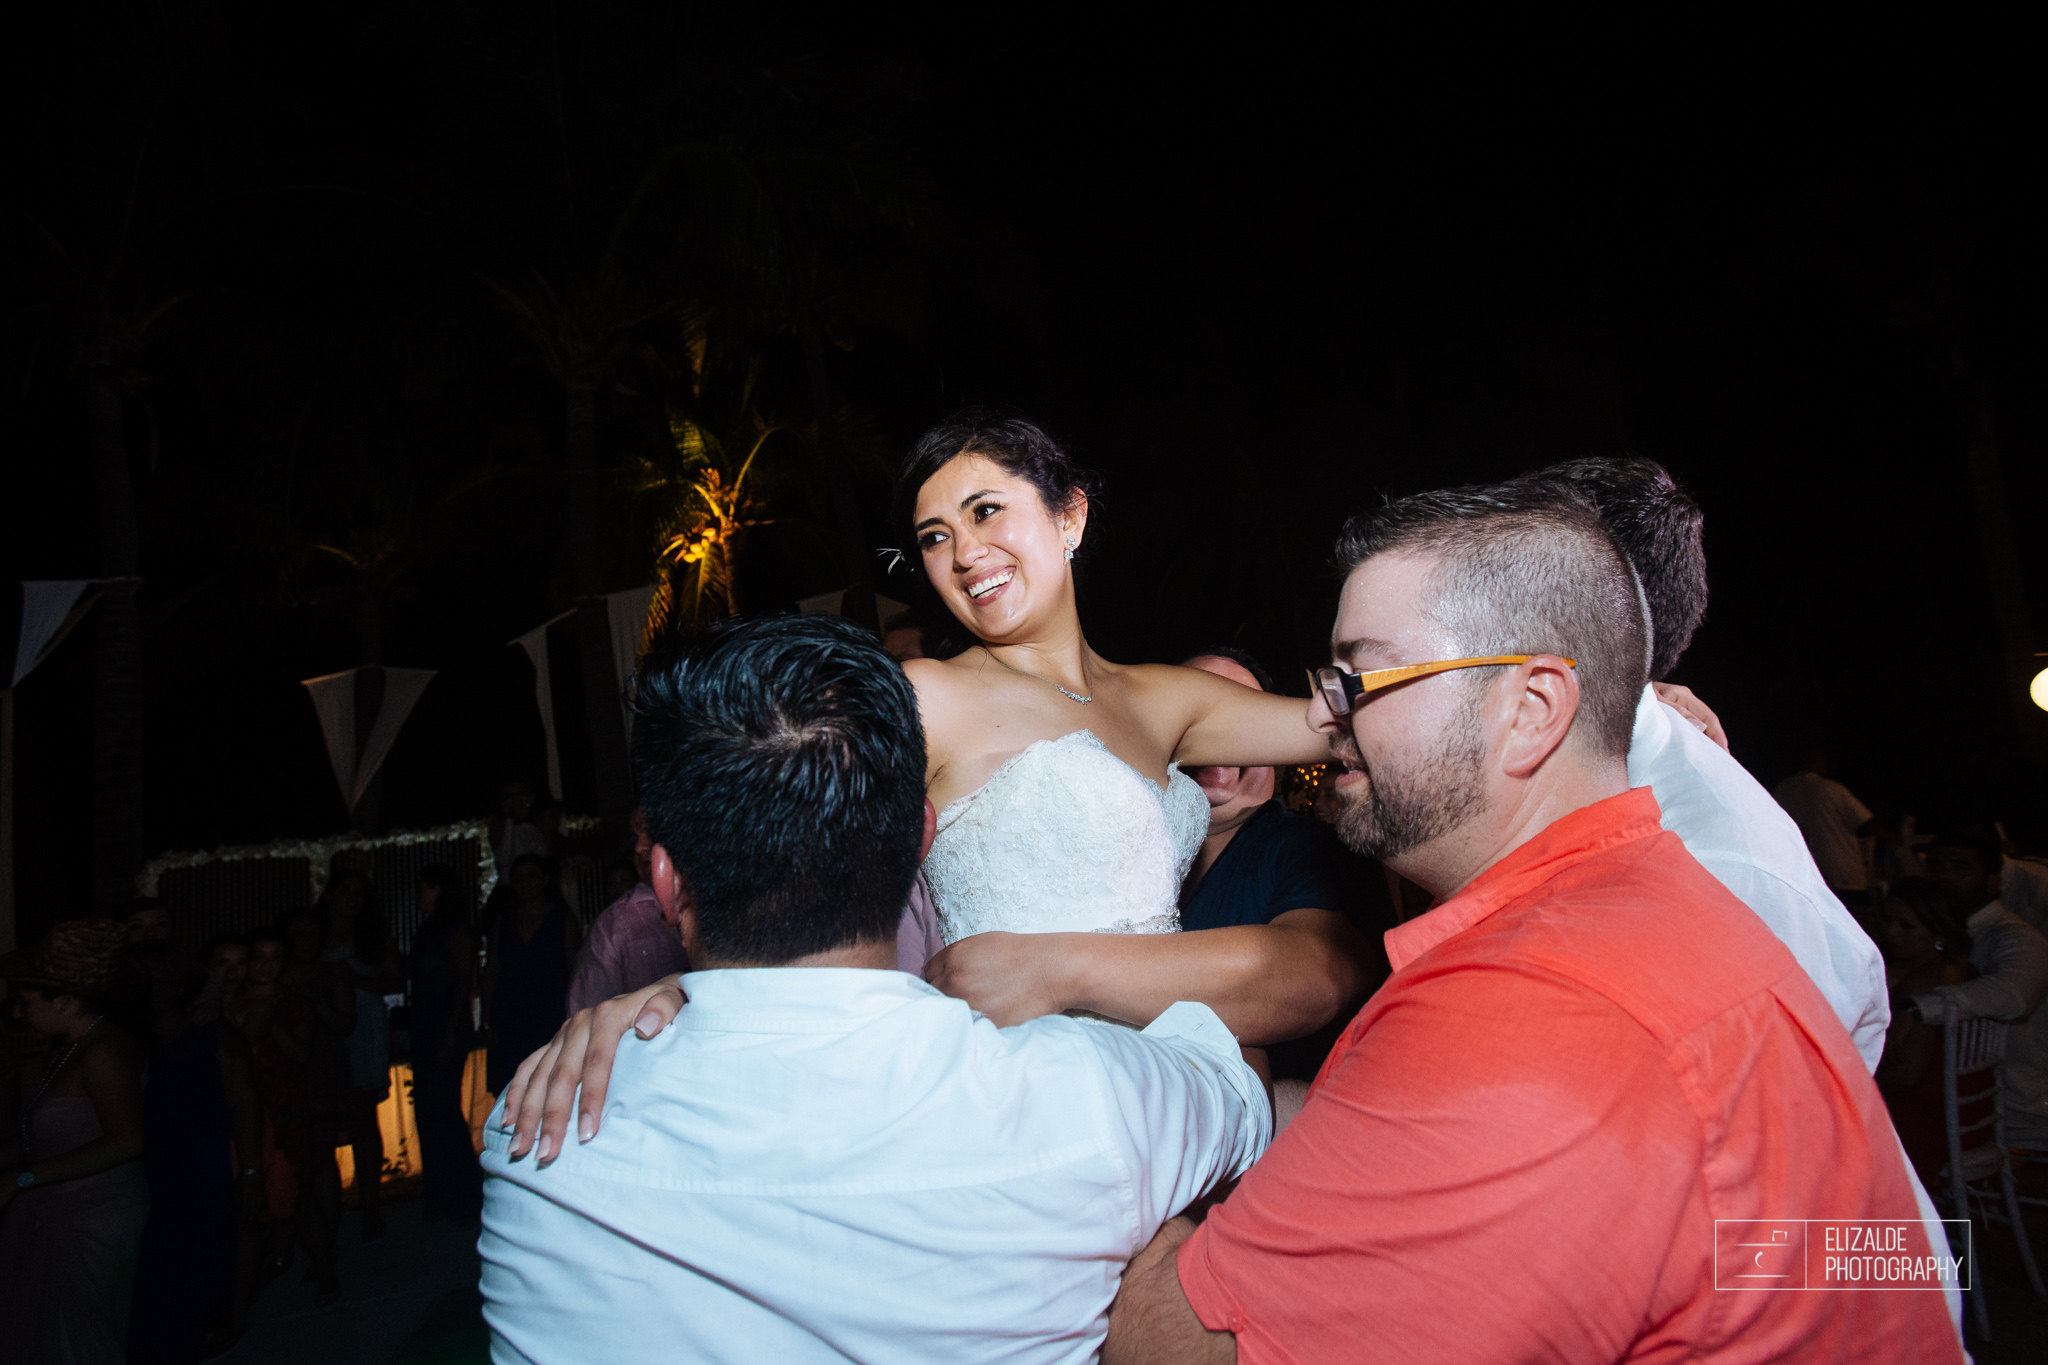 Pay and Ferran_Acapulco_Destination Wedding_Elizalde Photography-171.jpg